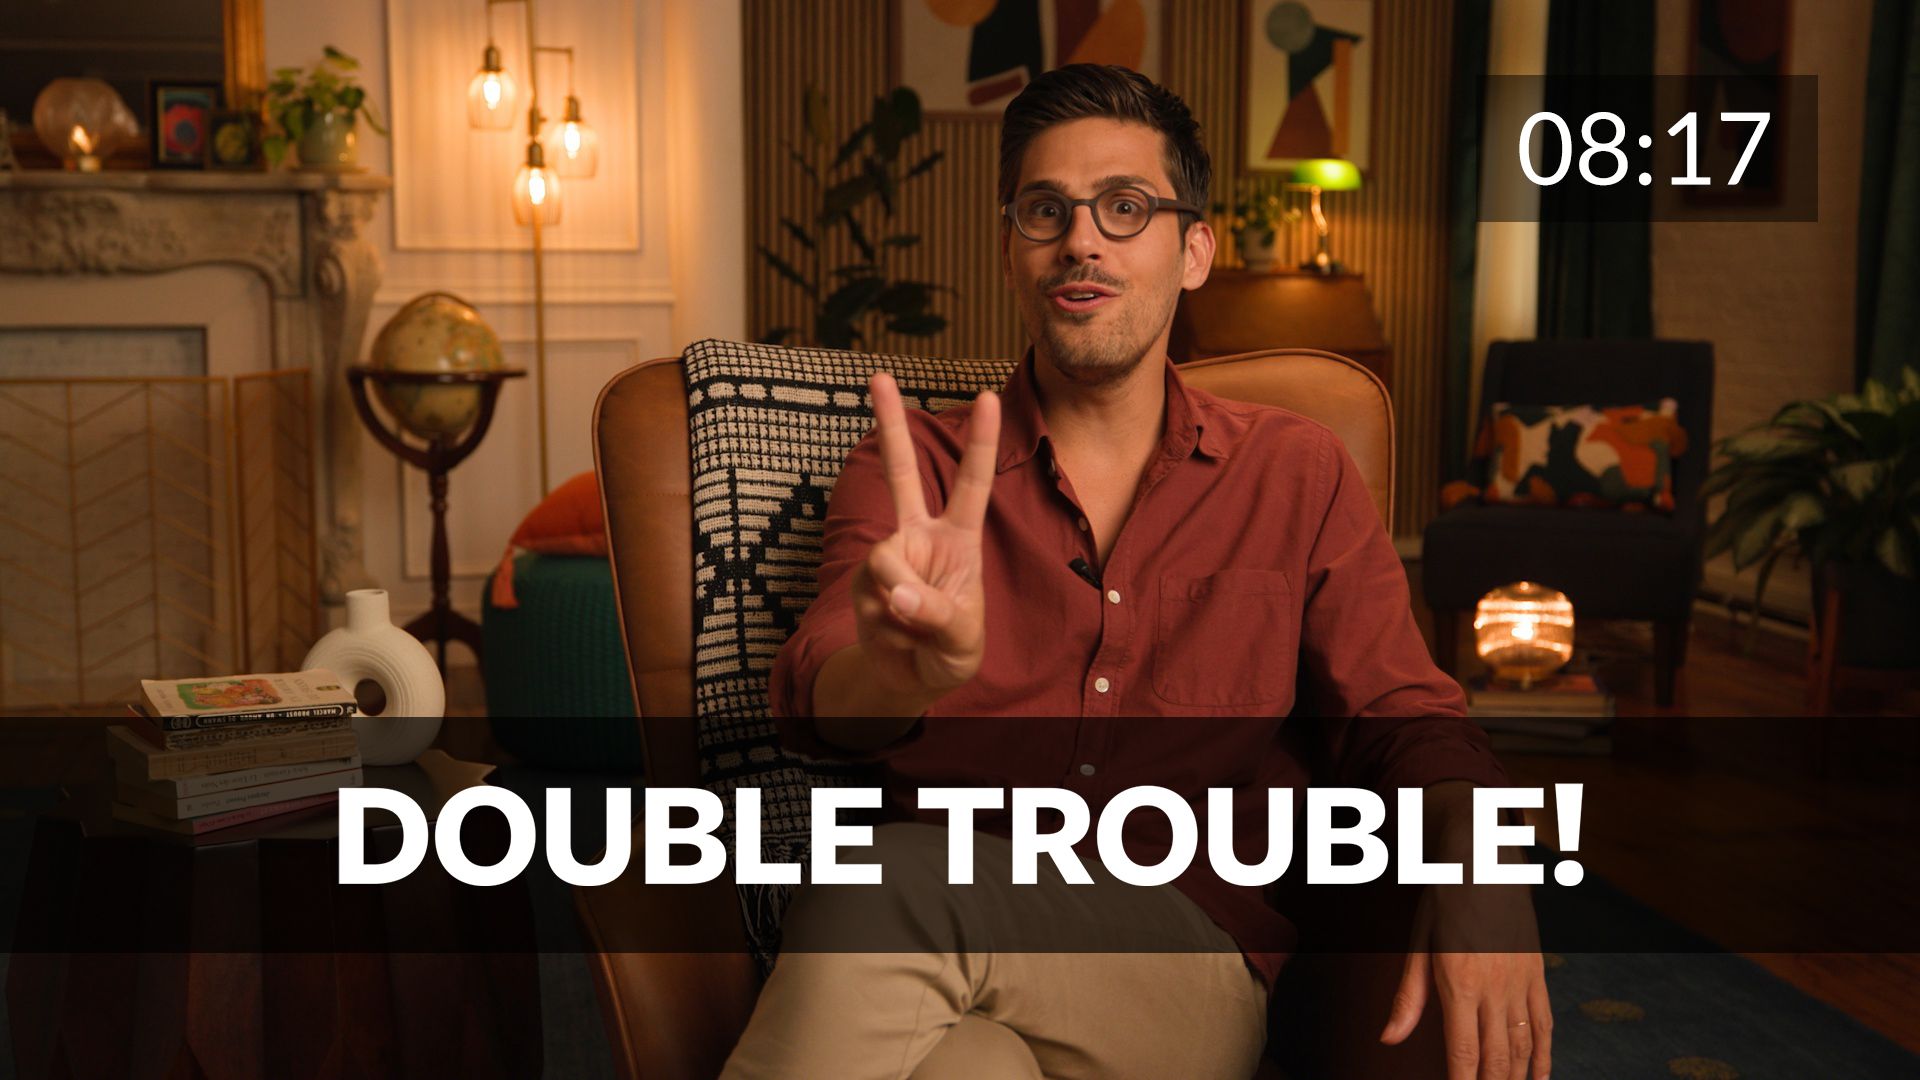 Double trouble!